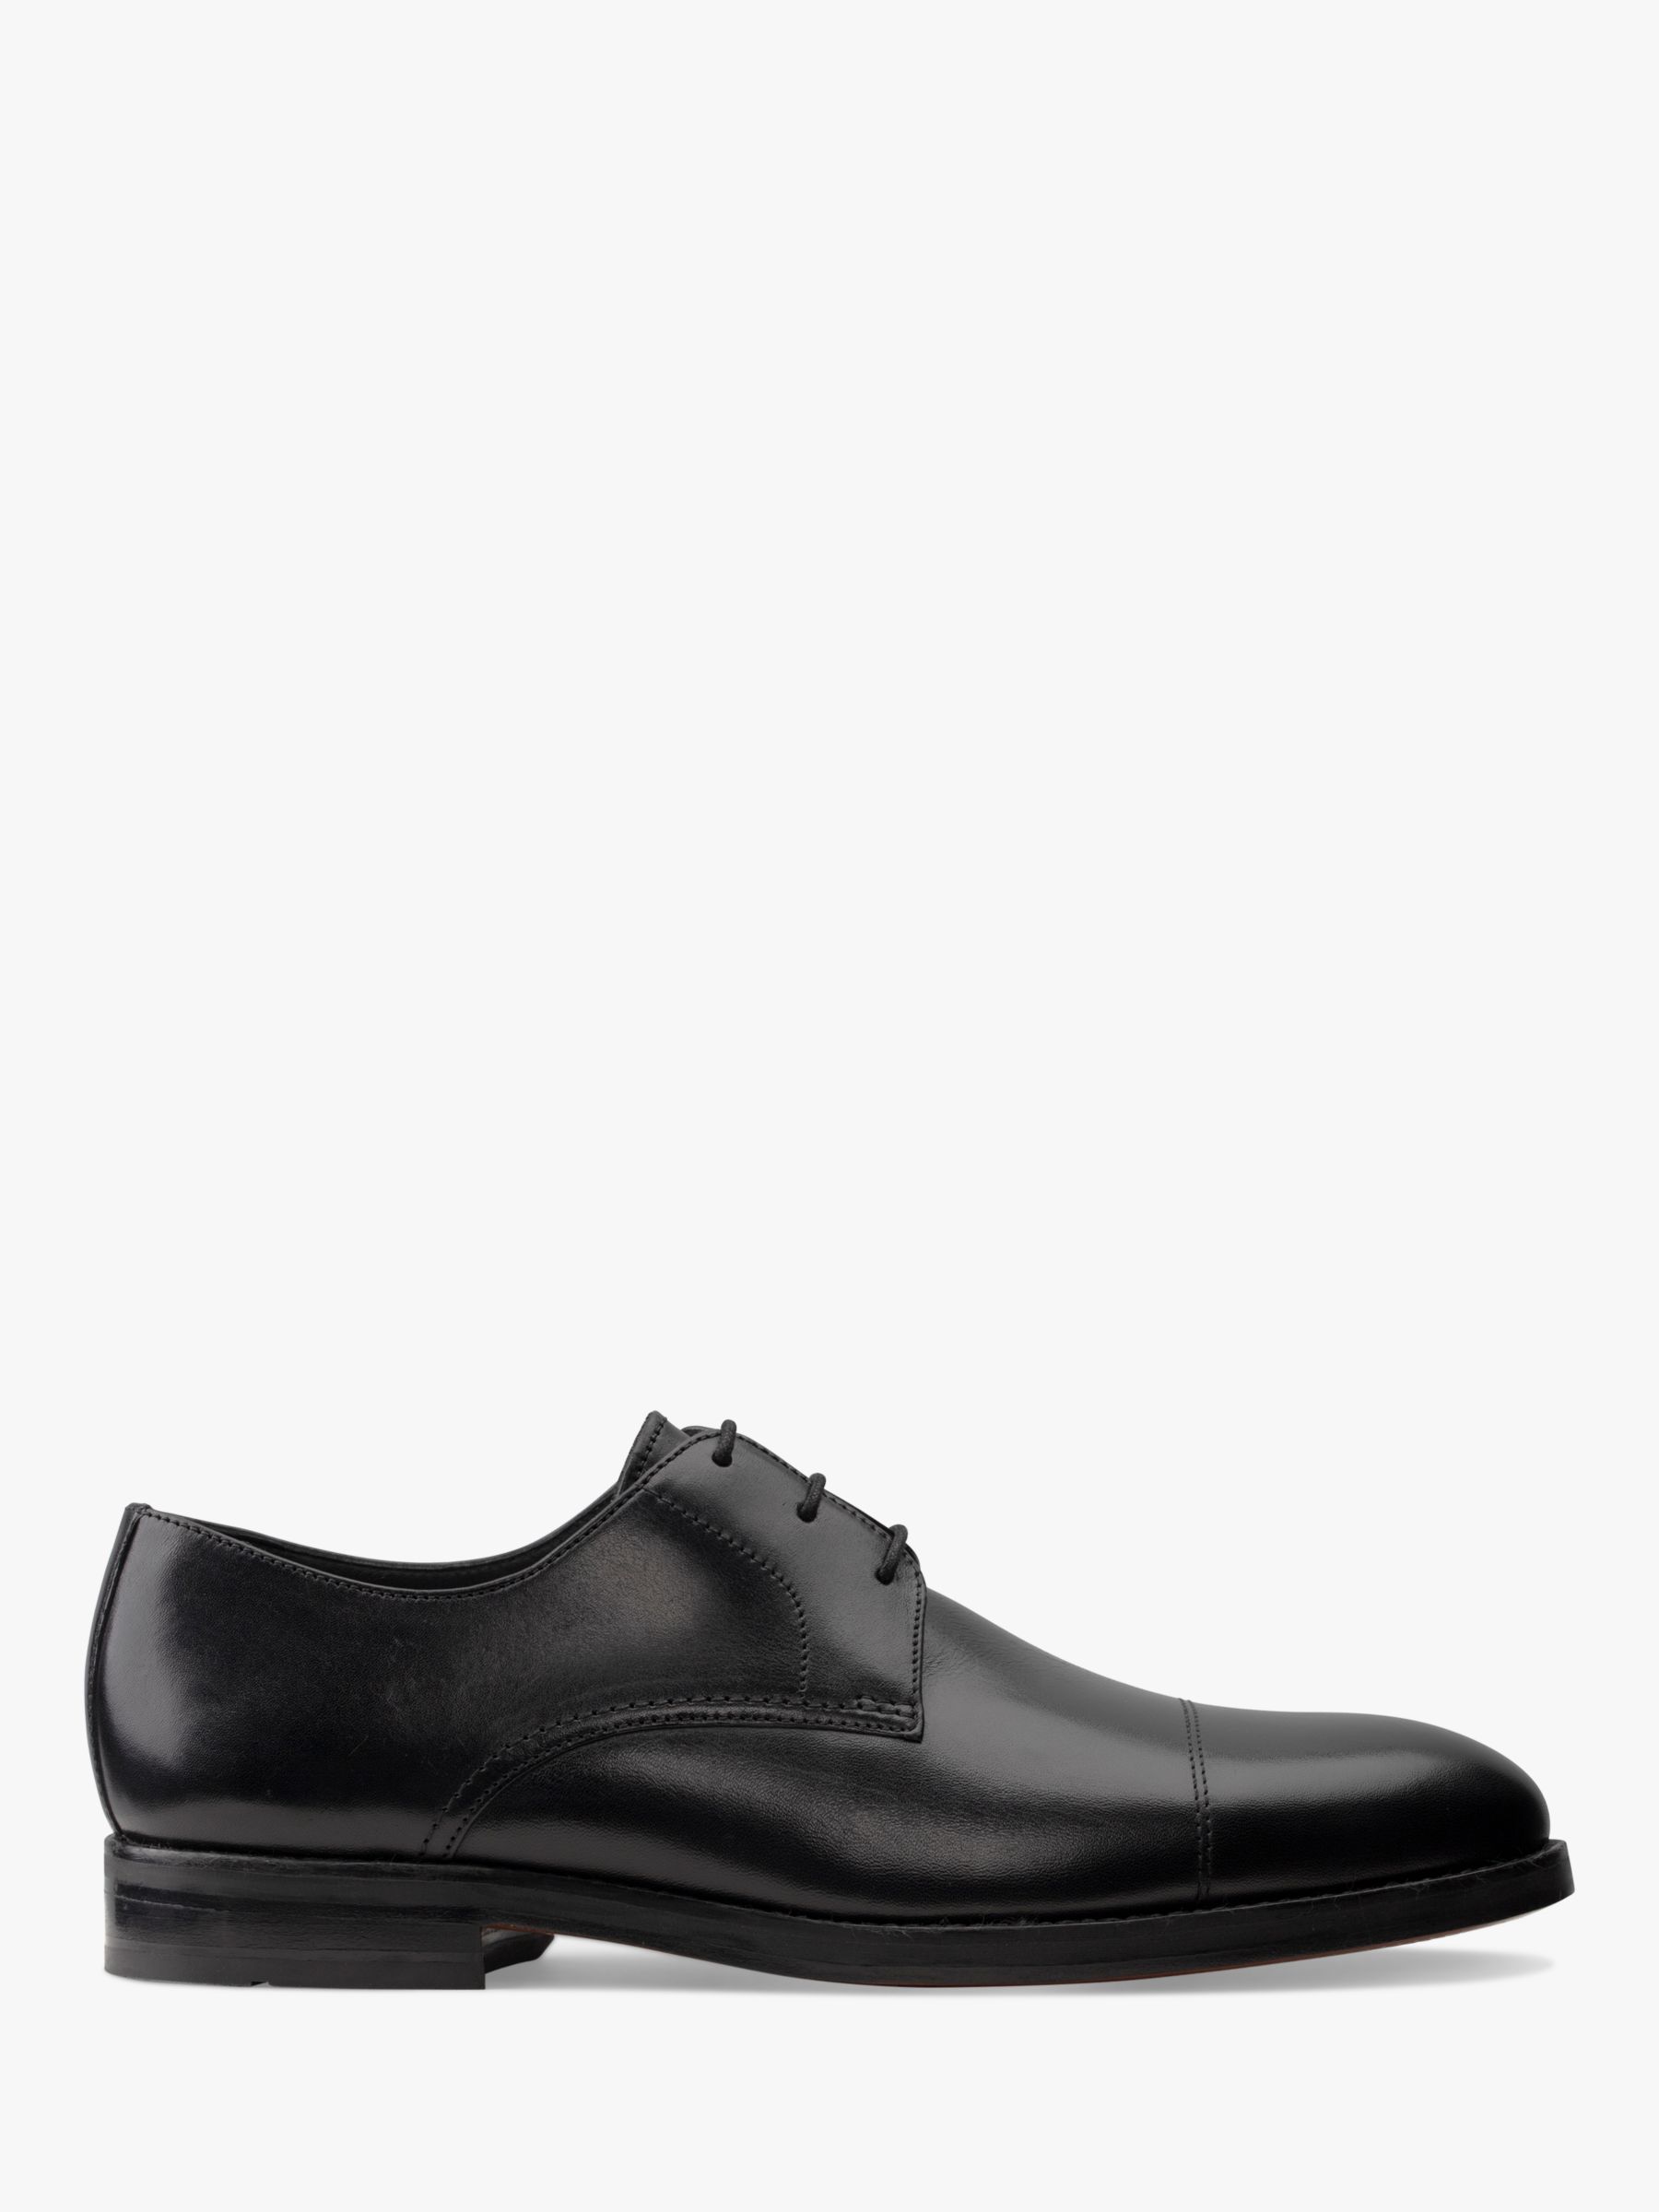 Clarks Oliver Cap Derby Leather Shoes, Black at John Lewis & Partners